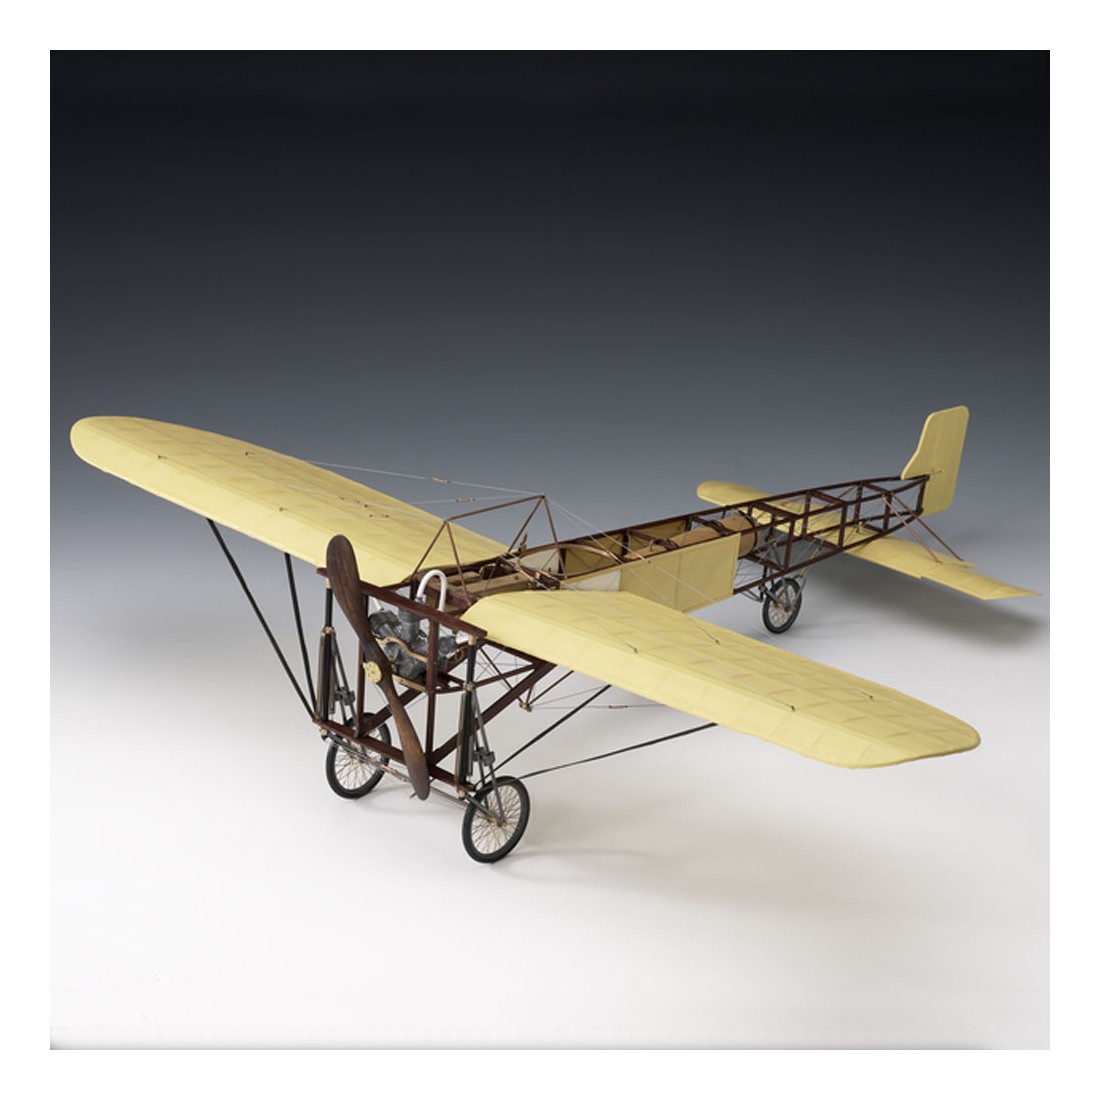 Bleriot Model Airplane